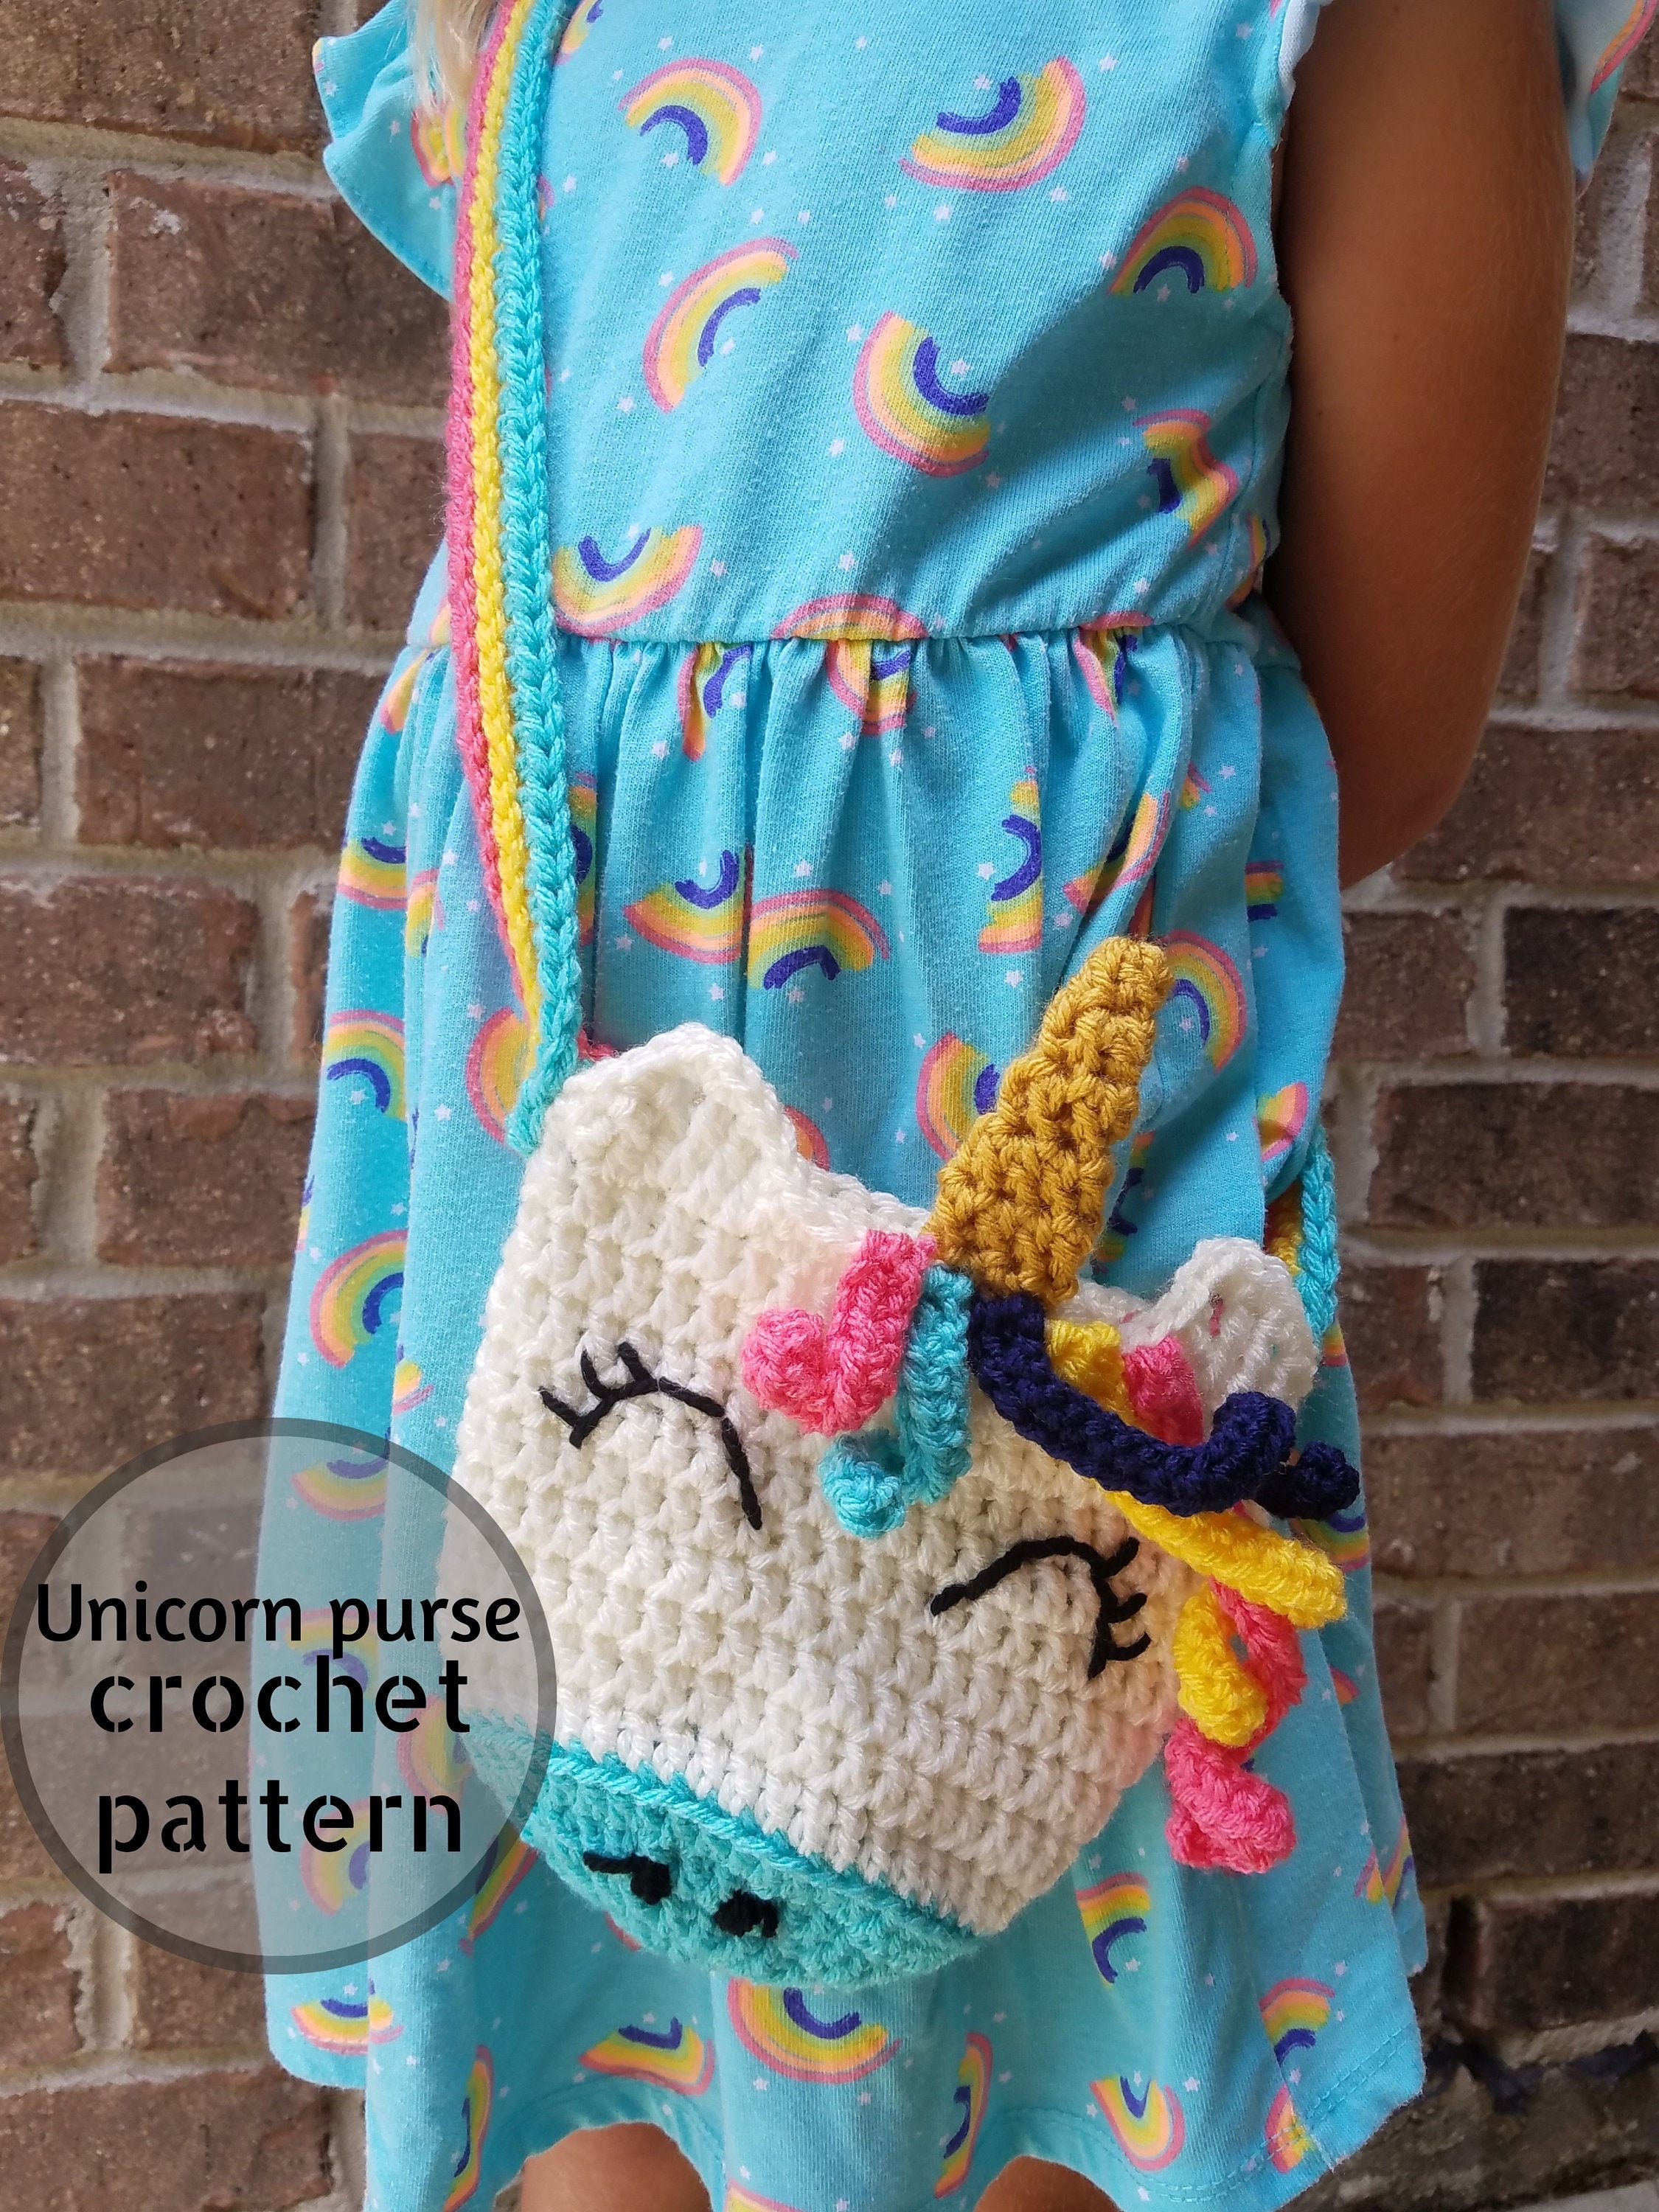 Crochet Unicorn Coin Purse Tutorial & Pattern - YouTube